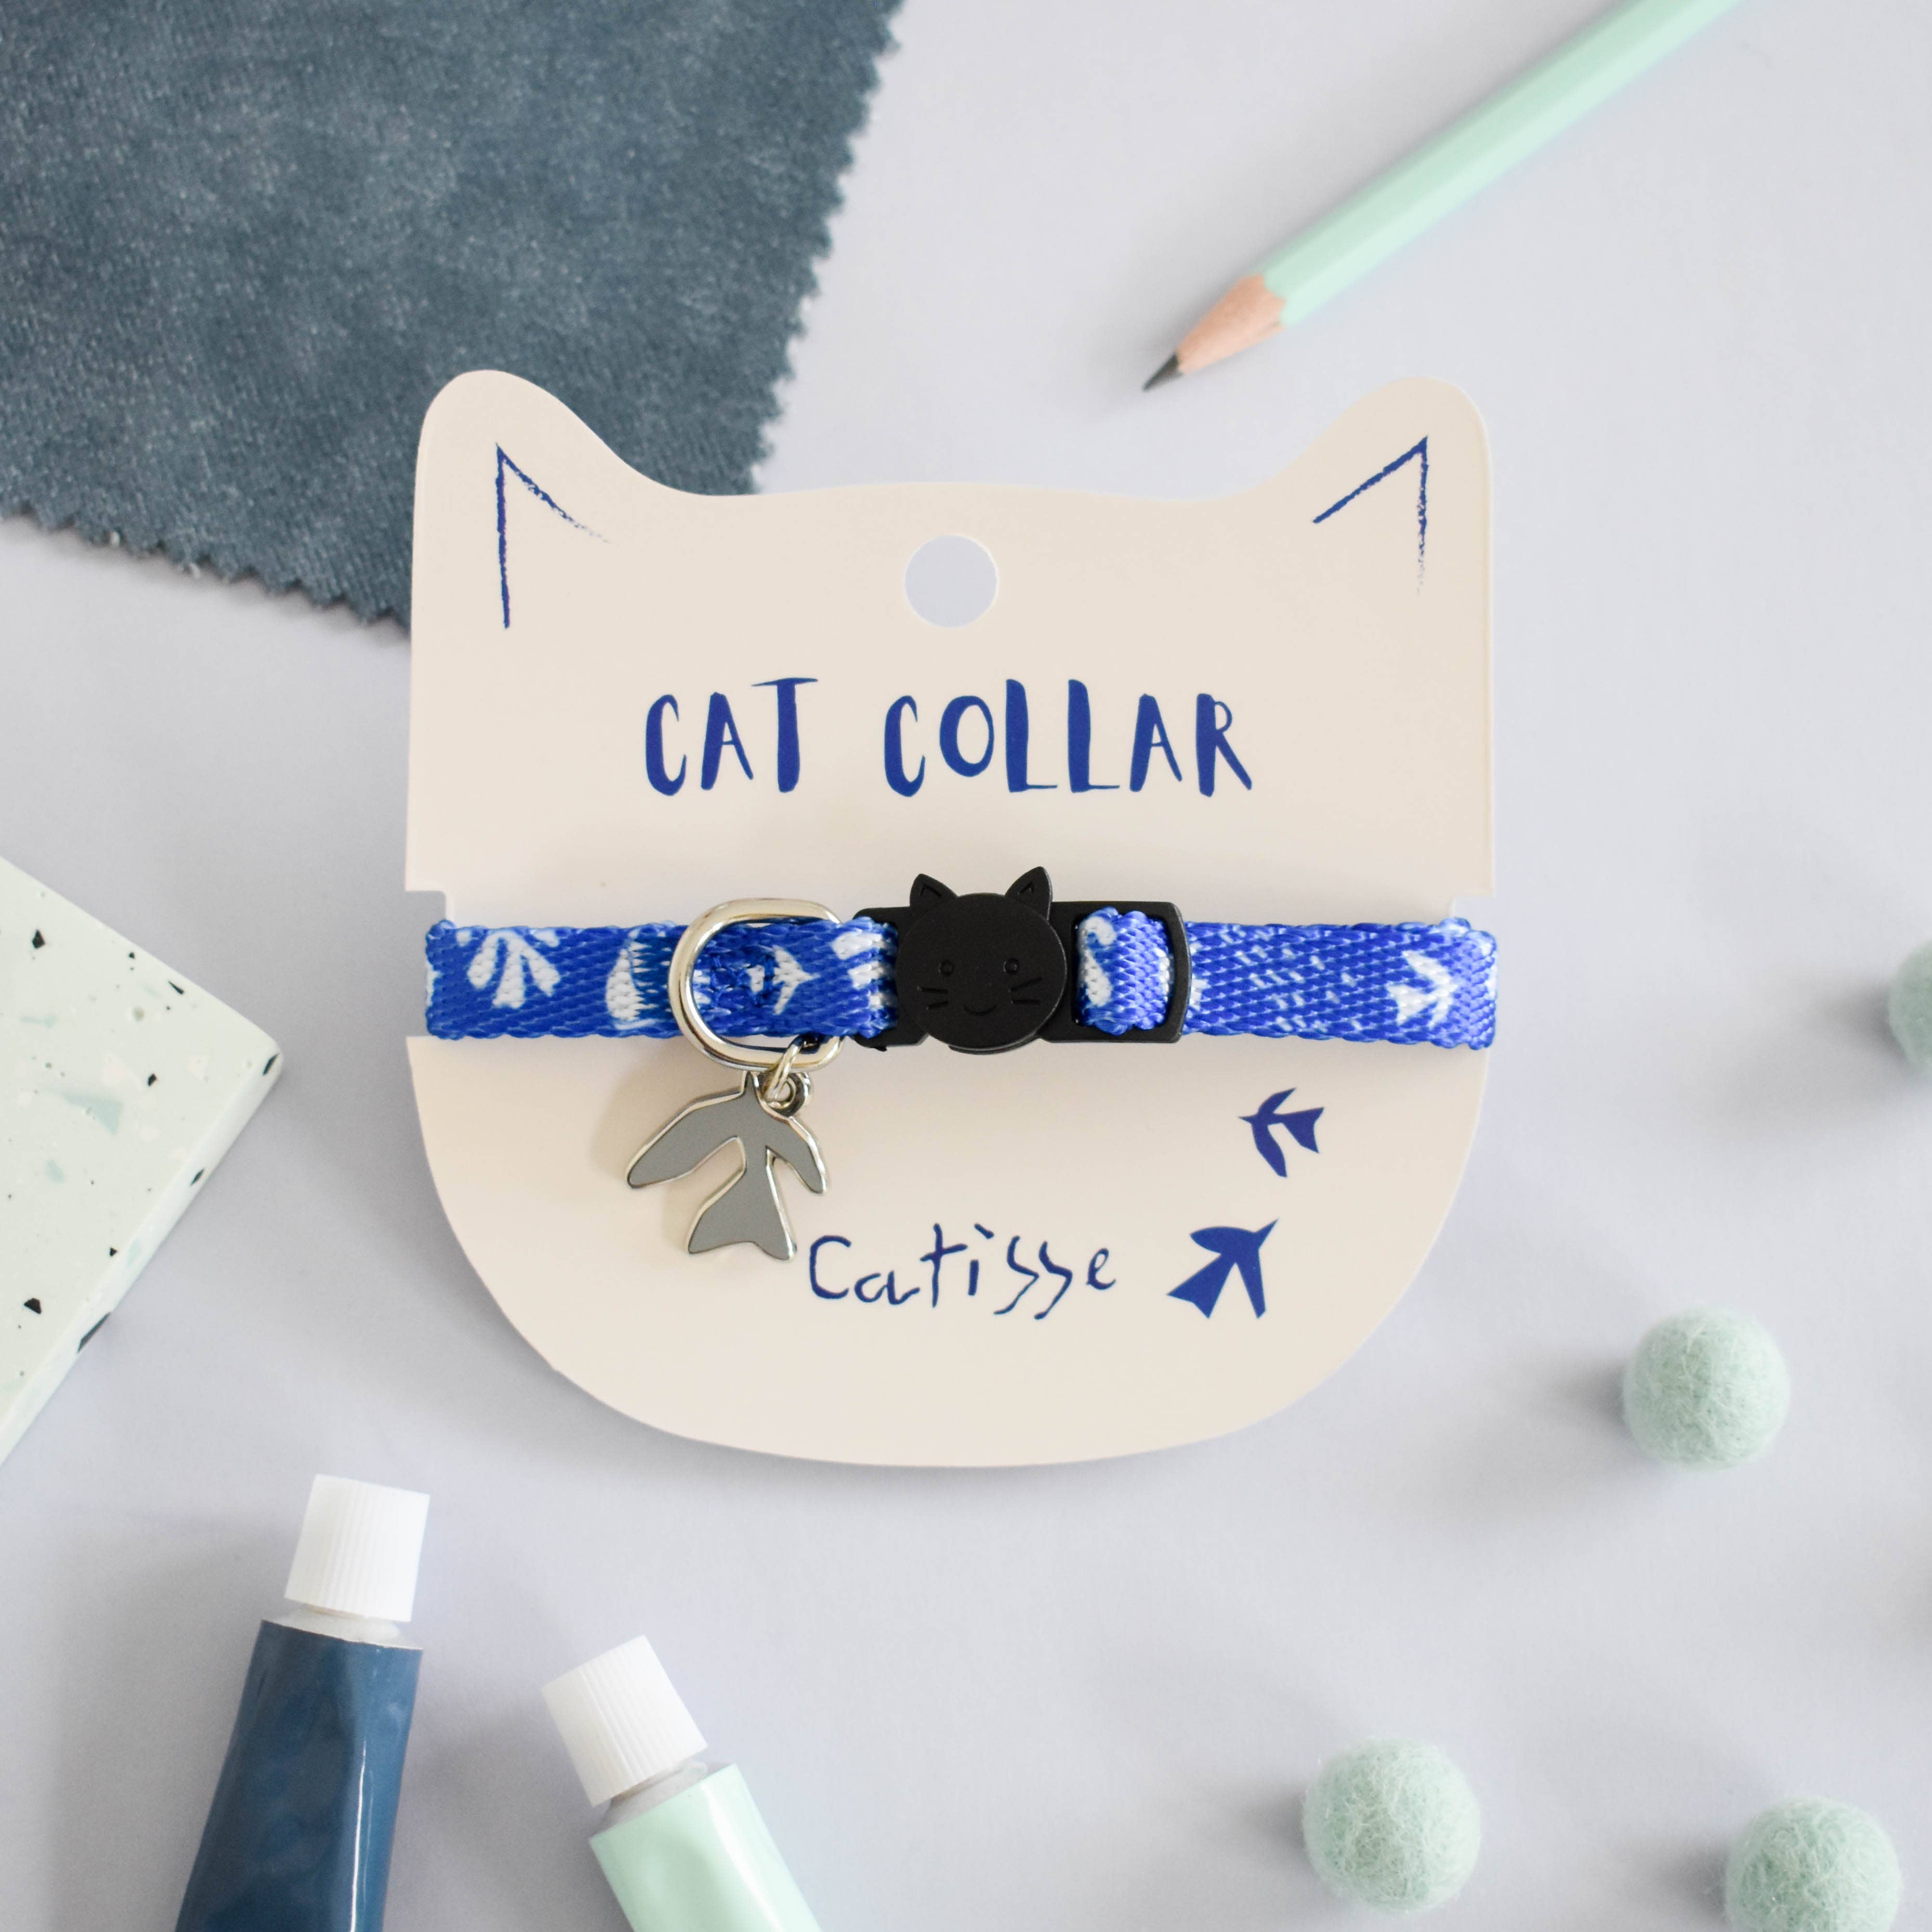 Art Cats Washi Tape: Catisse